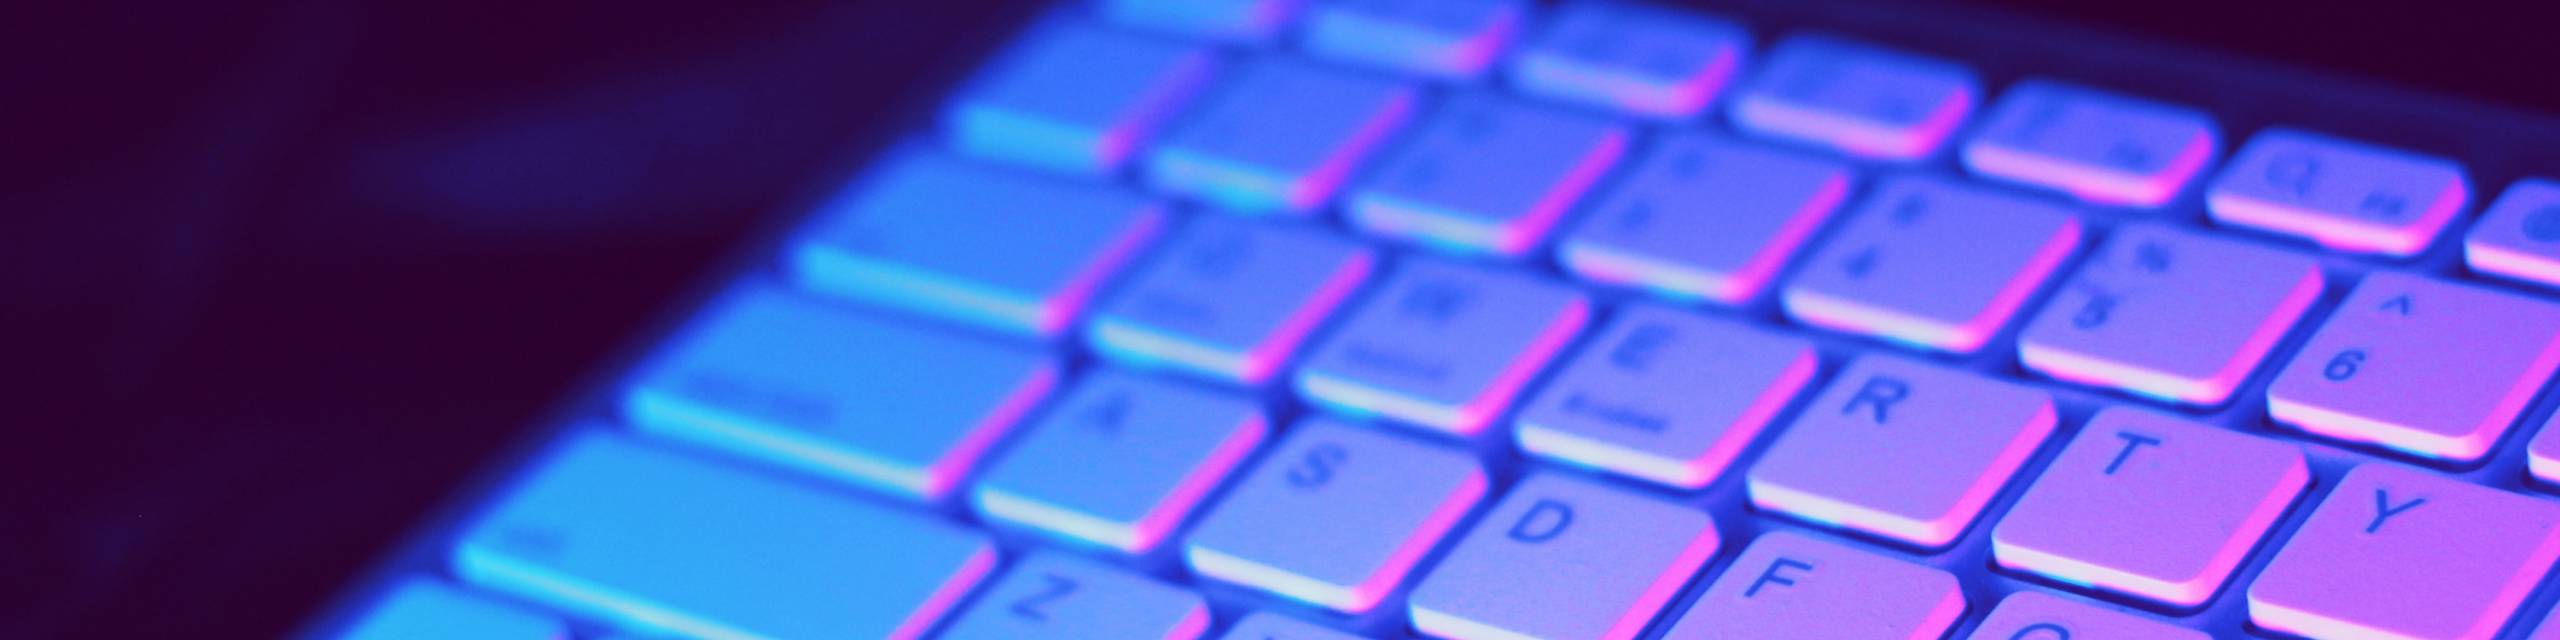 Image of a computer keyboard in dark moody lighting.